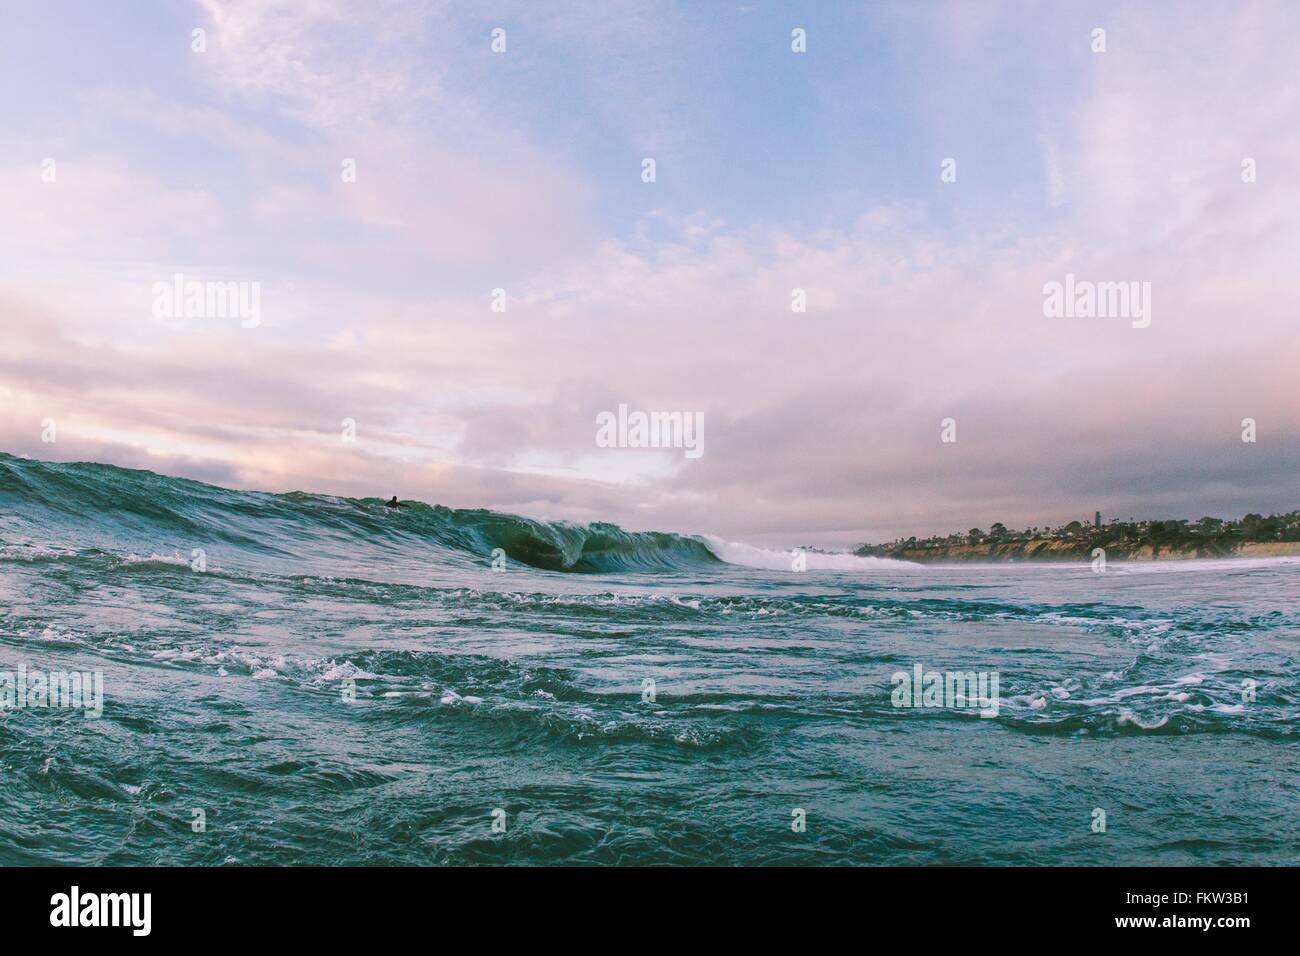 Distant view of surfer on ocean wave near coast, Encinitas, California, USA Stock Photo